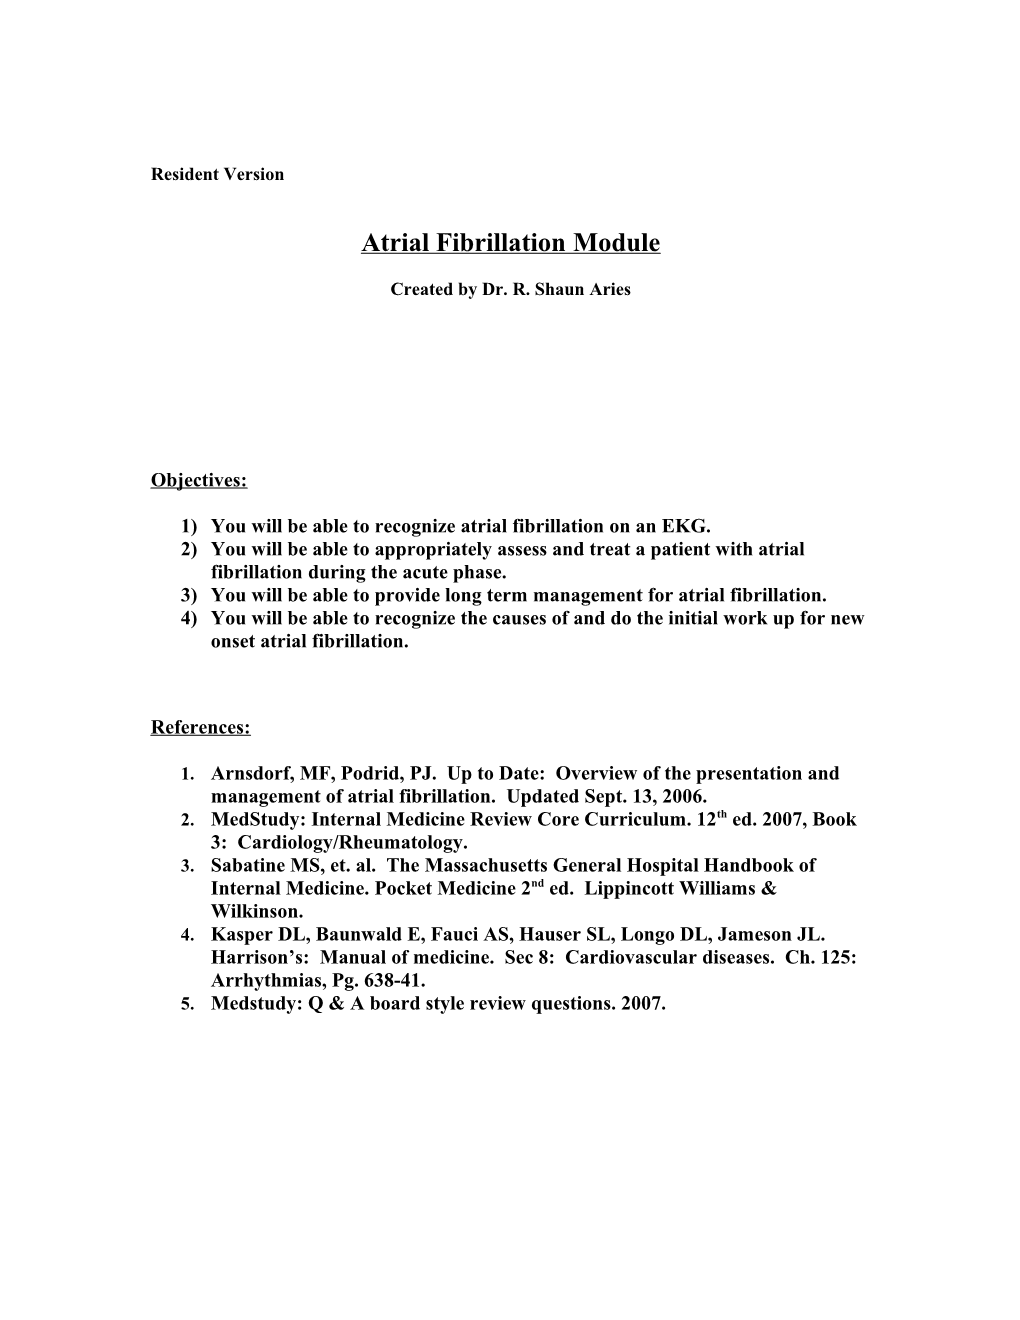 Atrial Fibrillation (AF) Discussion